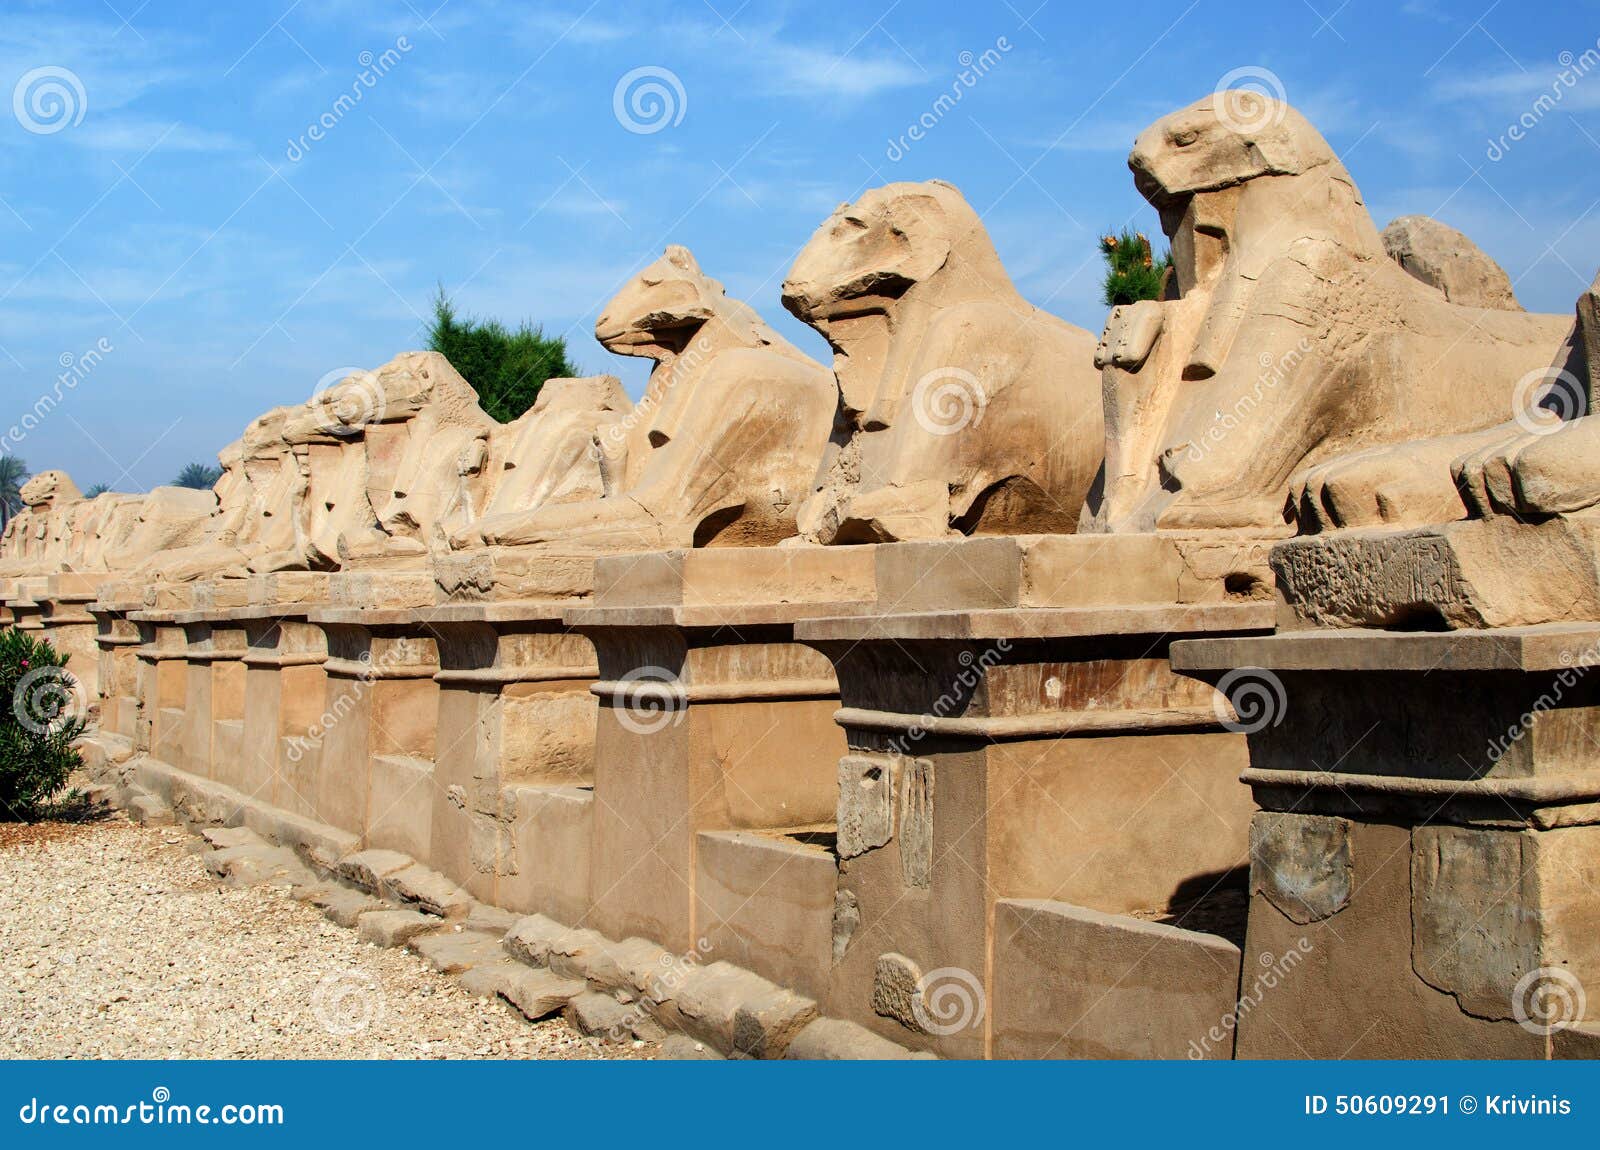 avenue of sphinxes in precinct of amun-re (karnak temple complex, luxor, egypt)